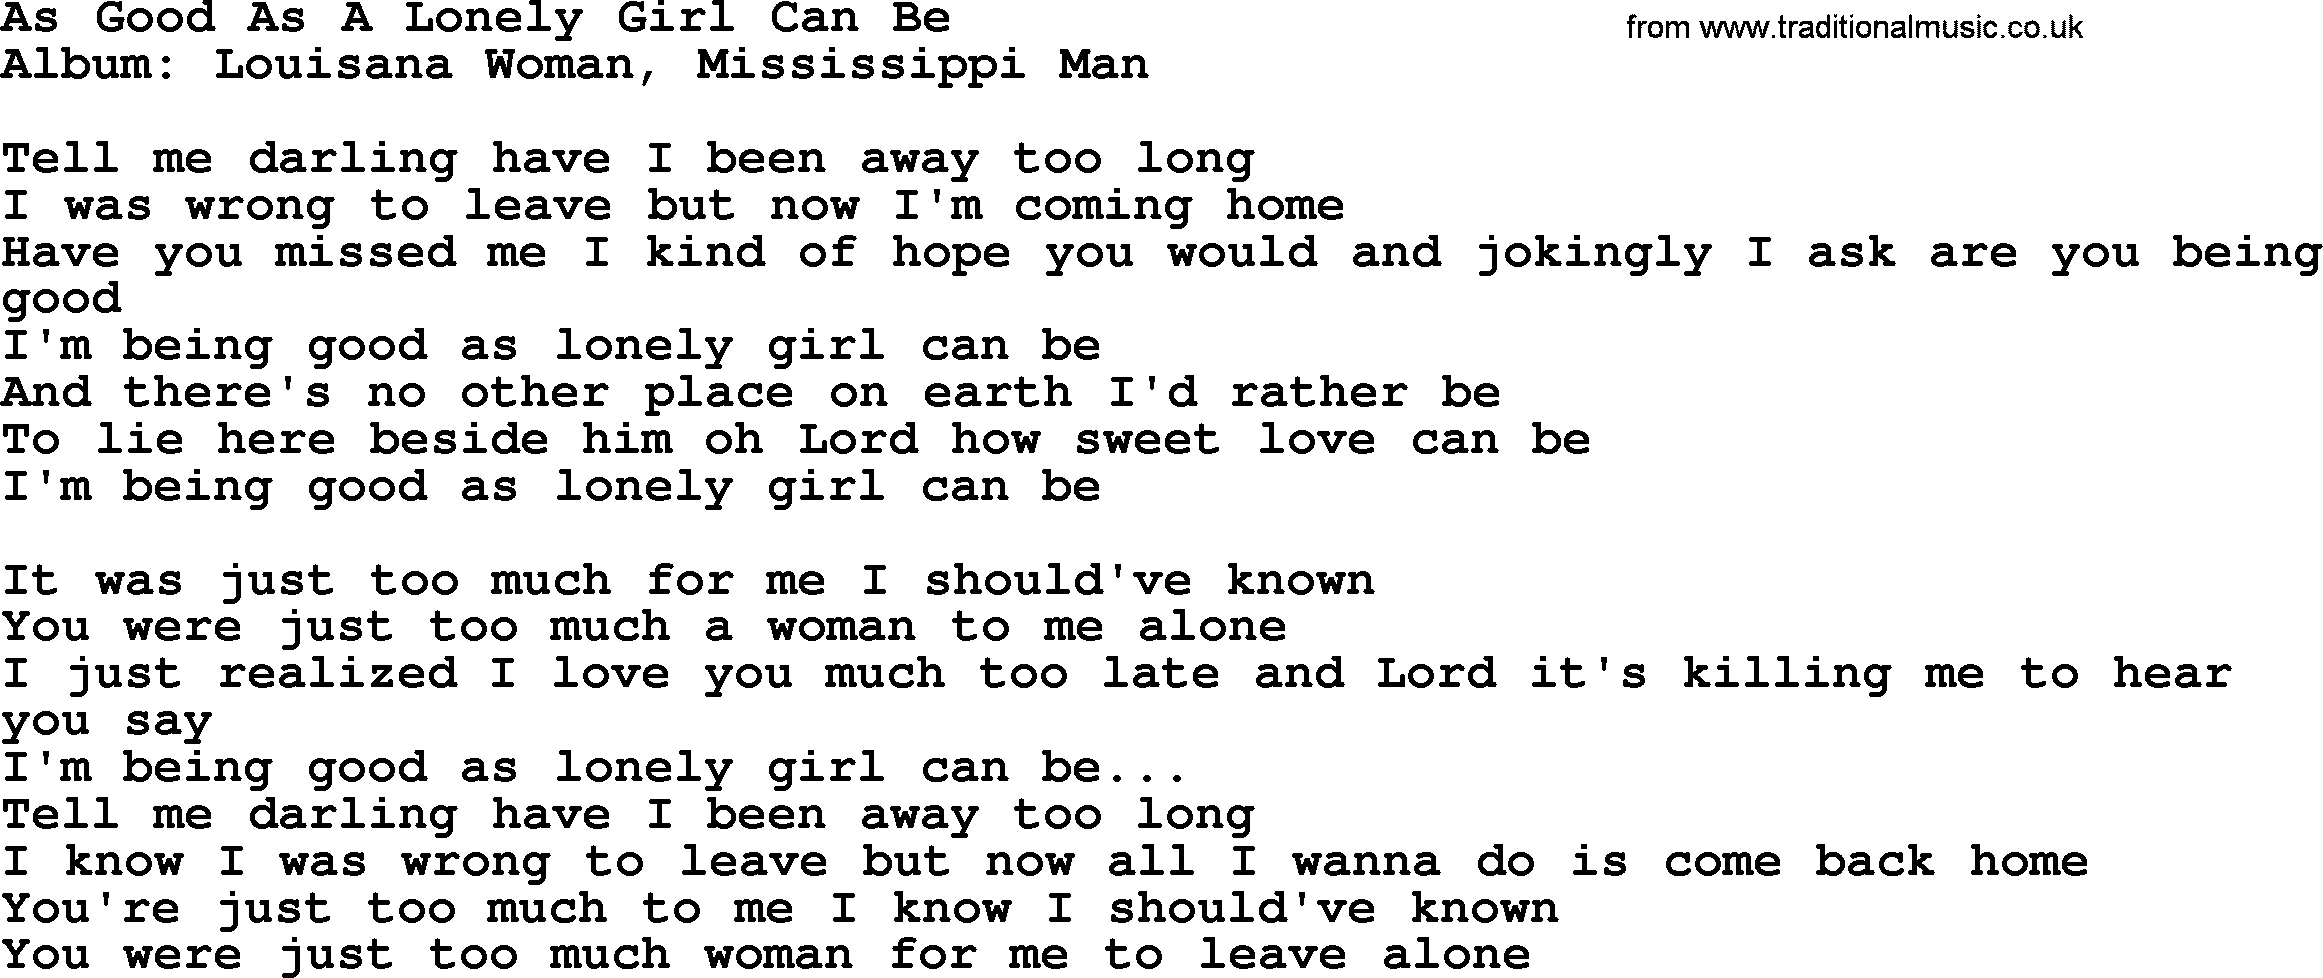 Loretta Lynn song: As Good As A Lonely Girl Can Be lyrics